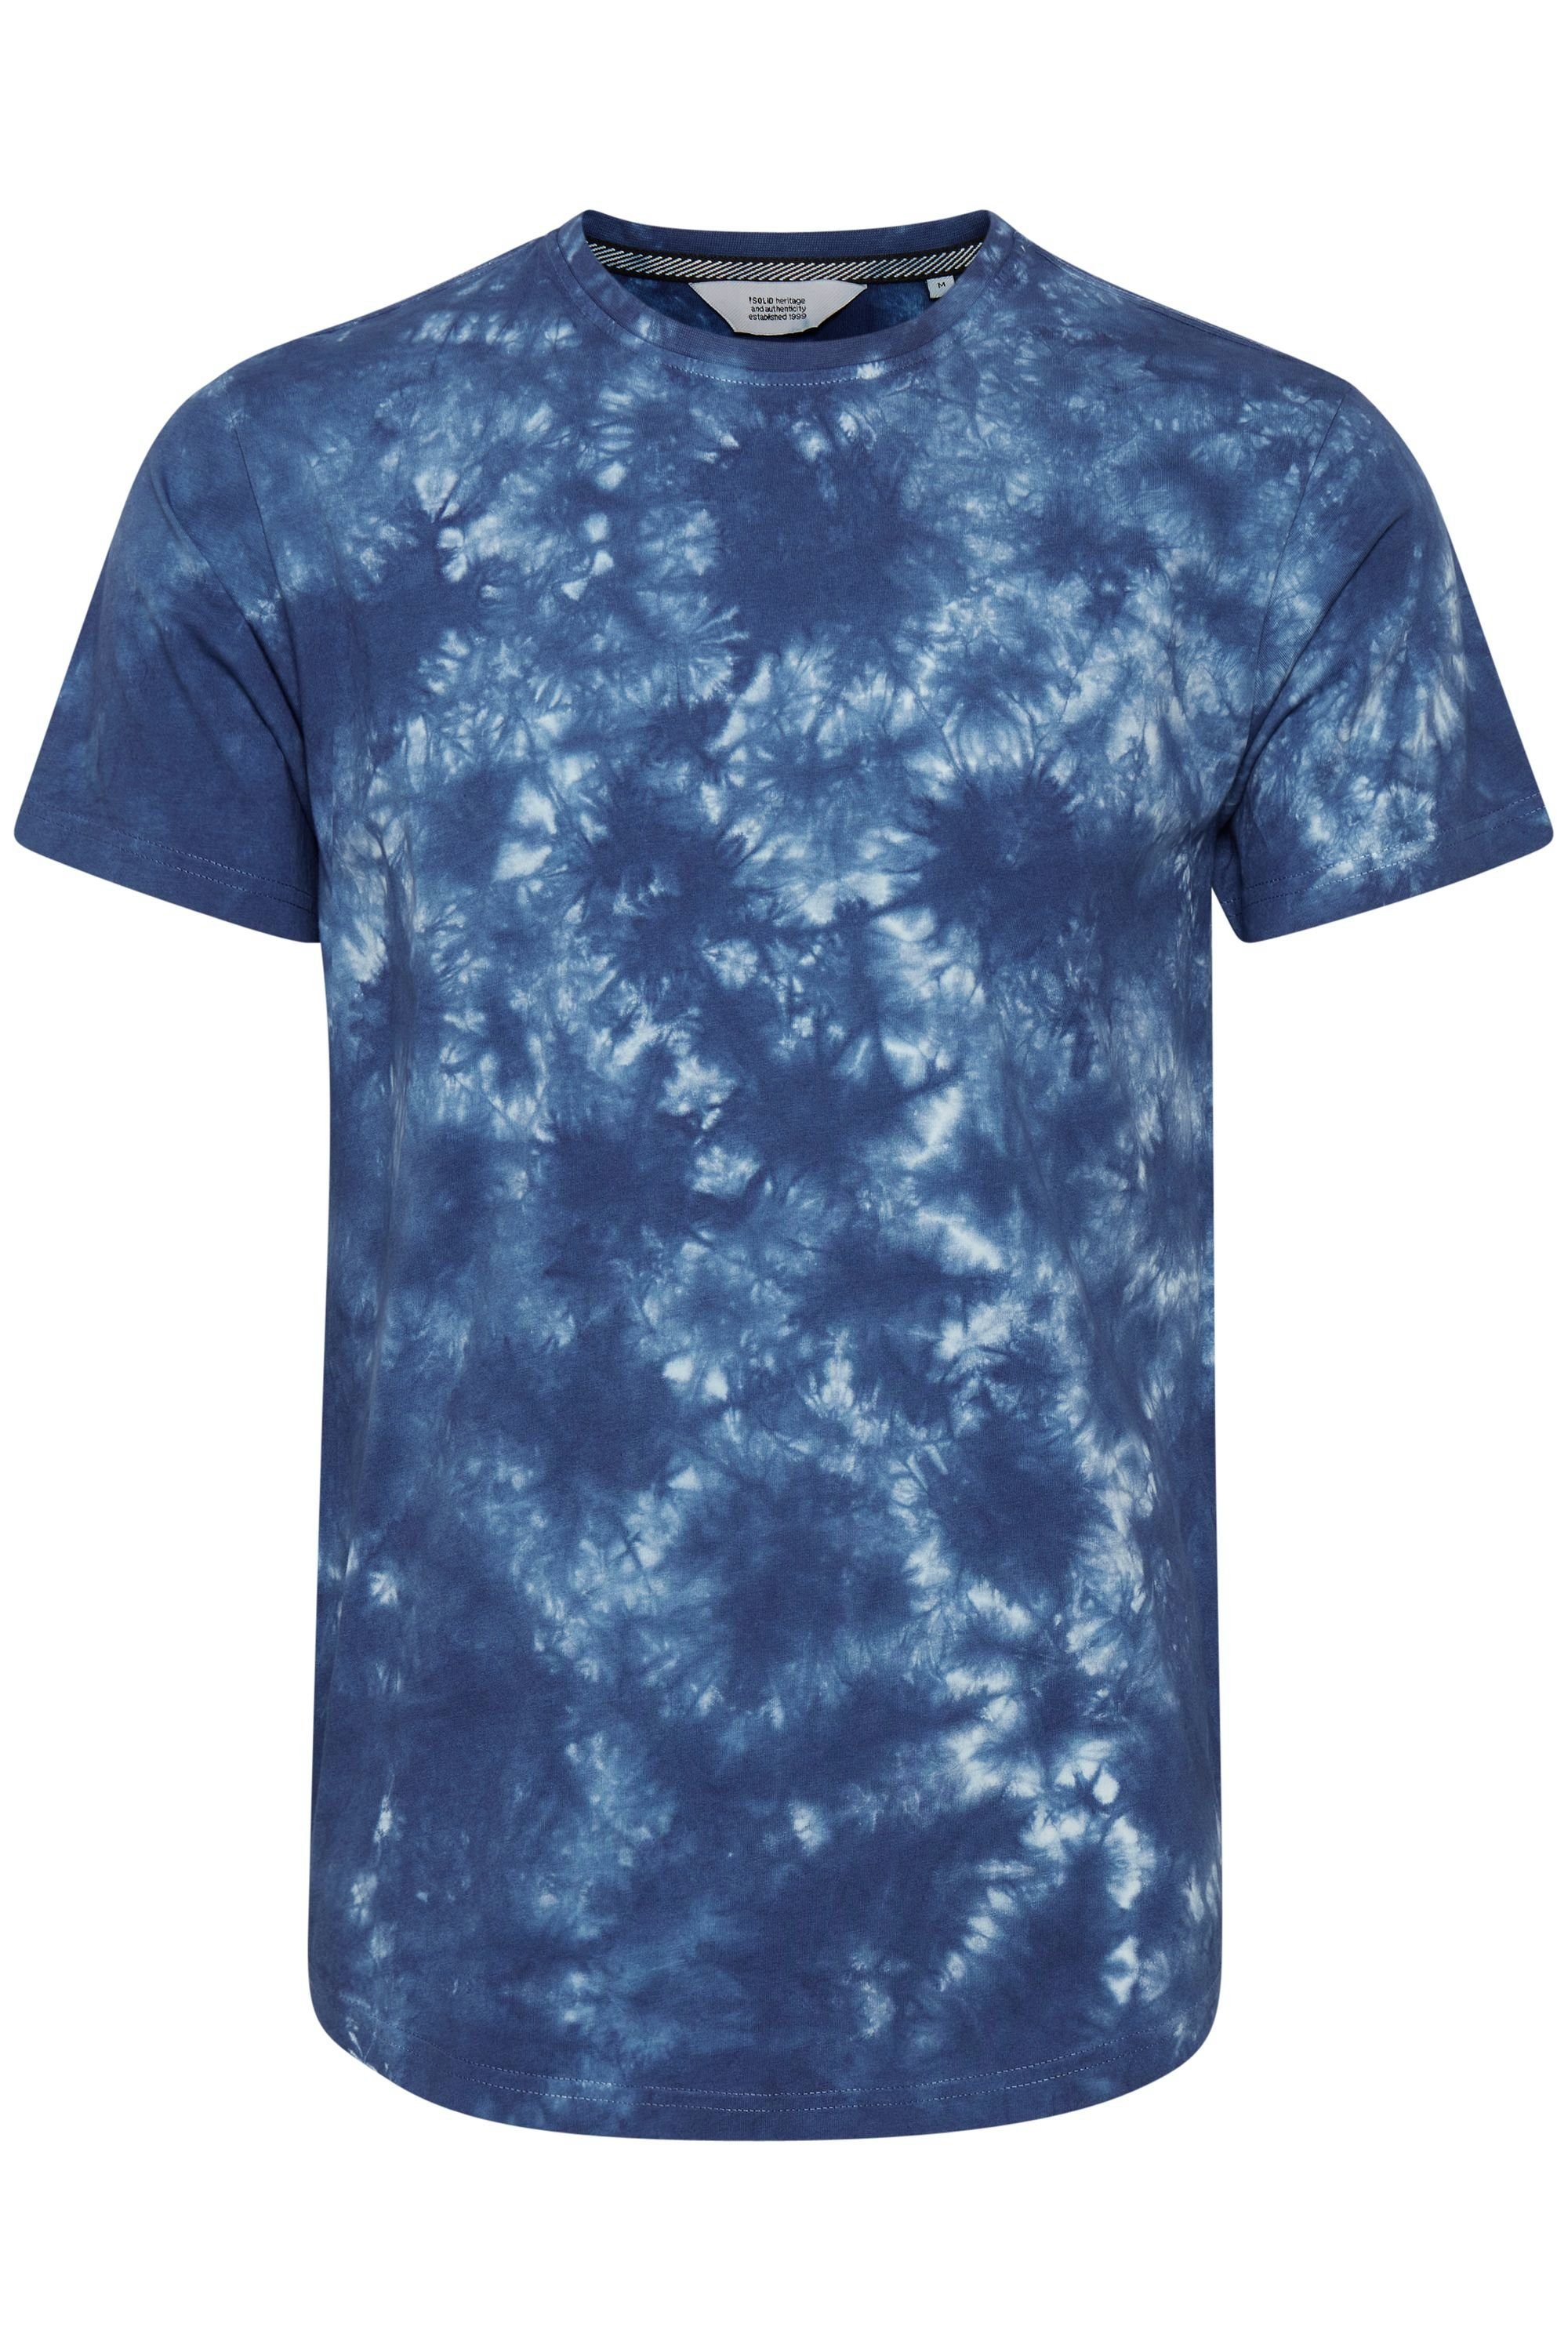 !Solid SDIver (194010) T-Shirt Blue Insignia T-Shirt